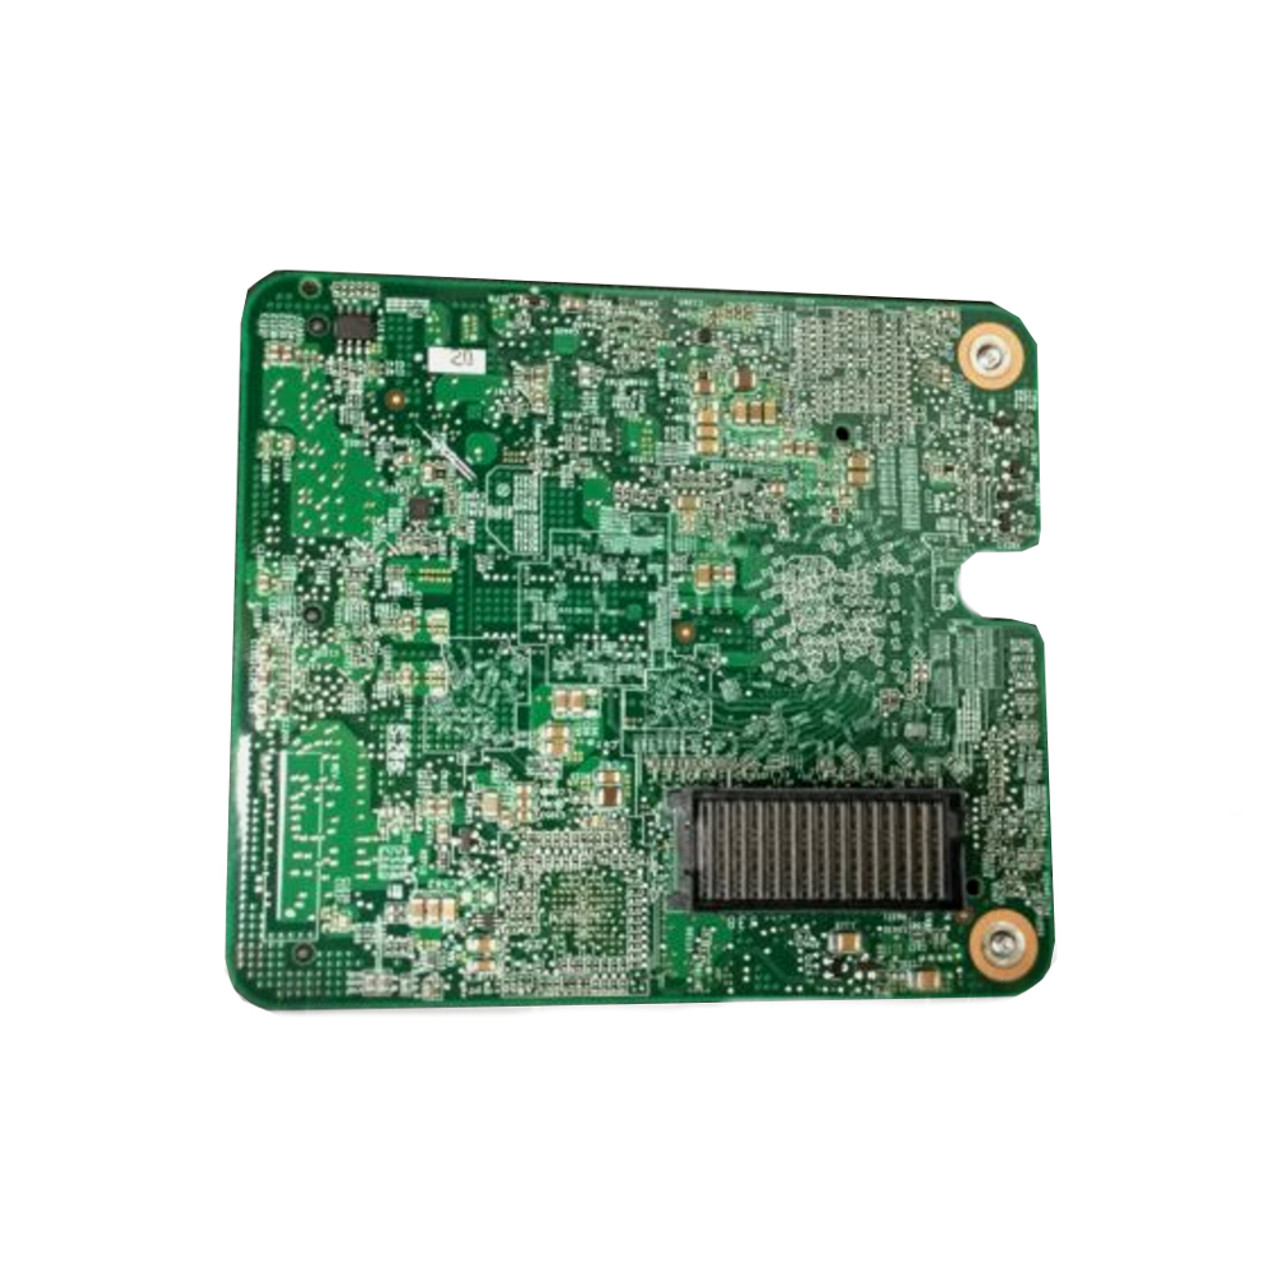 HP - P420i - Smart Array - High Profile - 1GB Cache - 6GBps - 2x SAS RAID  Card (689245-001)